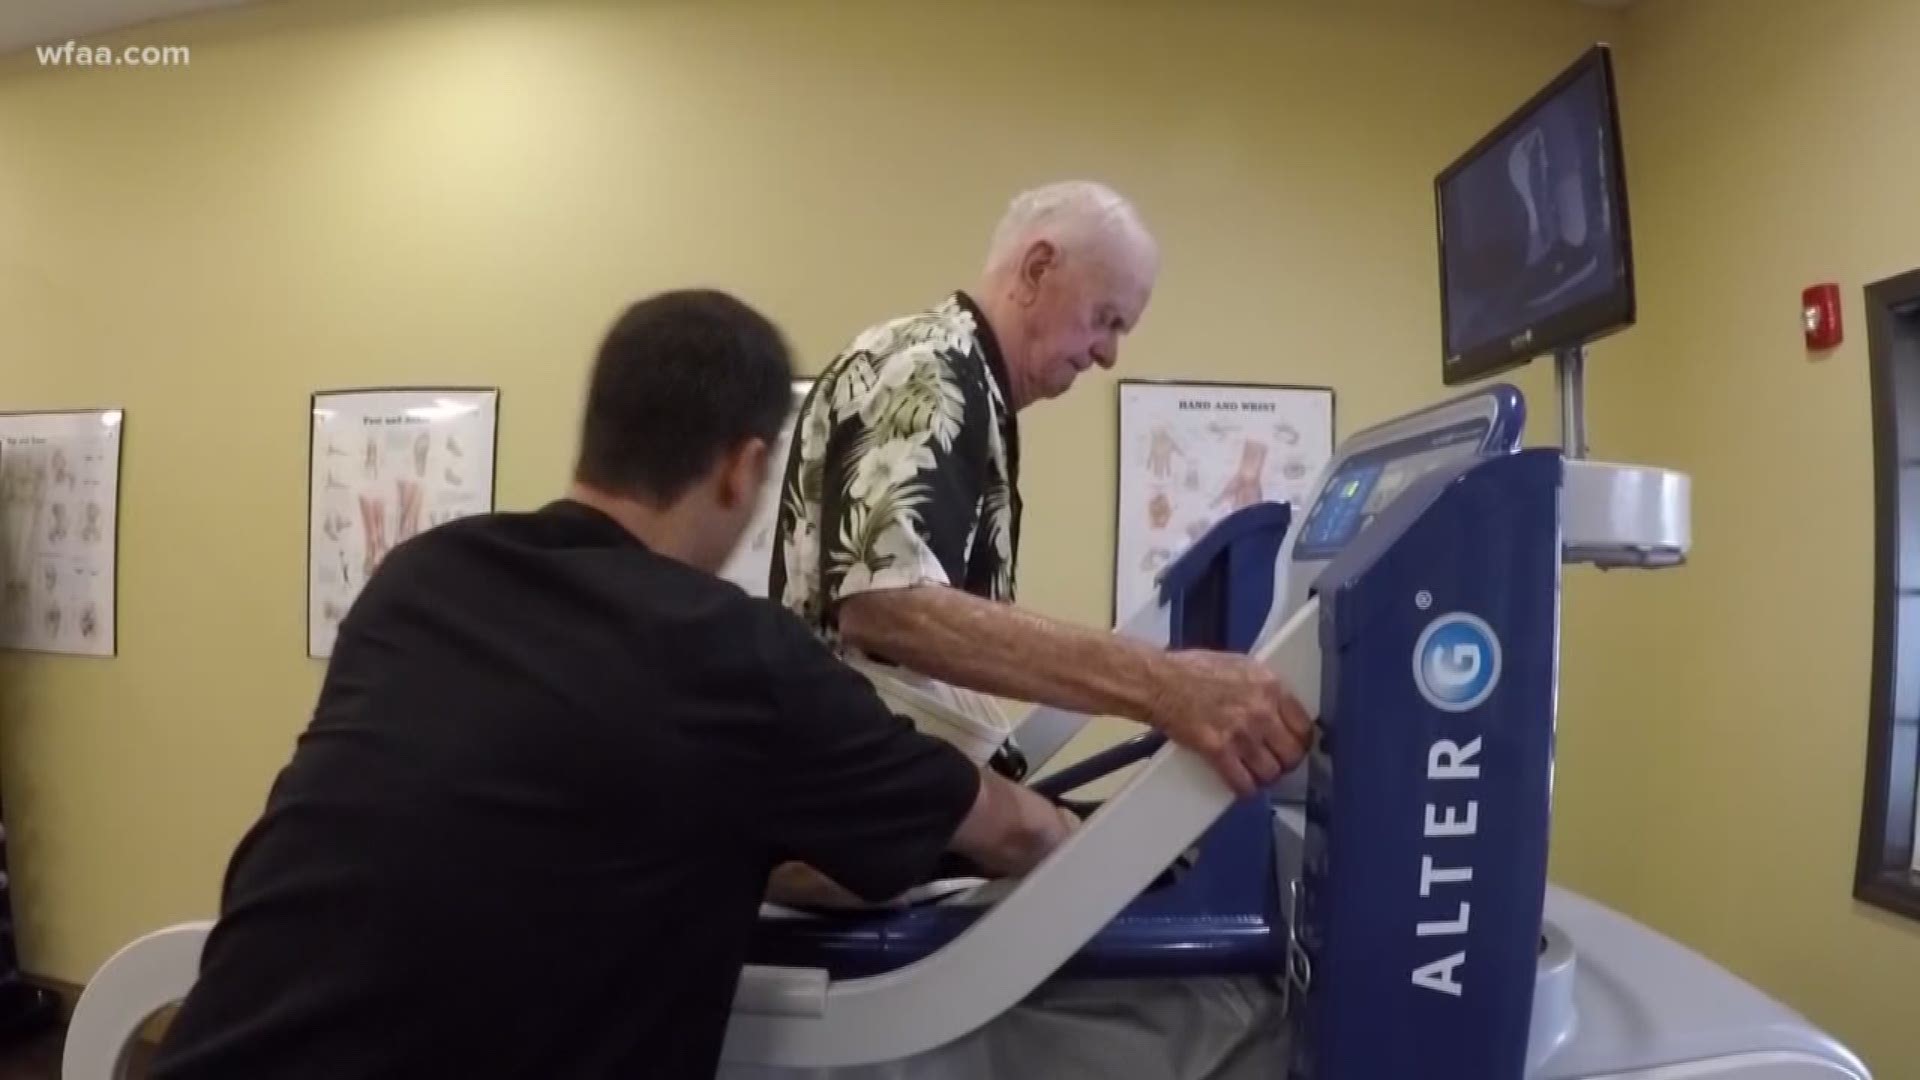 NASA technology helps rehab patients 